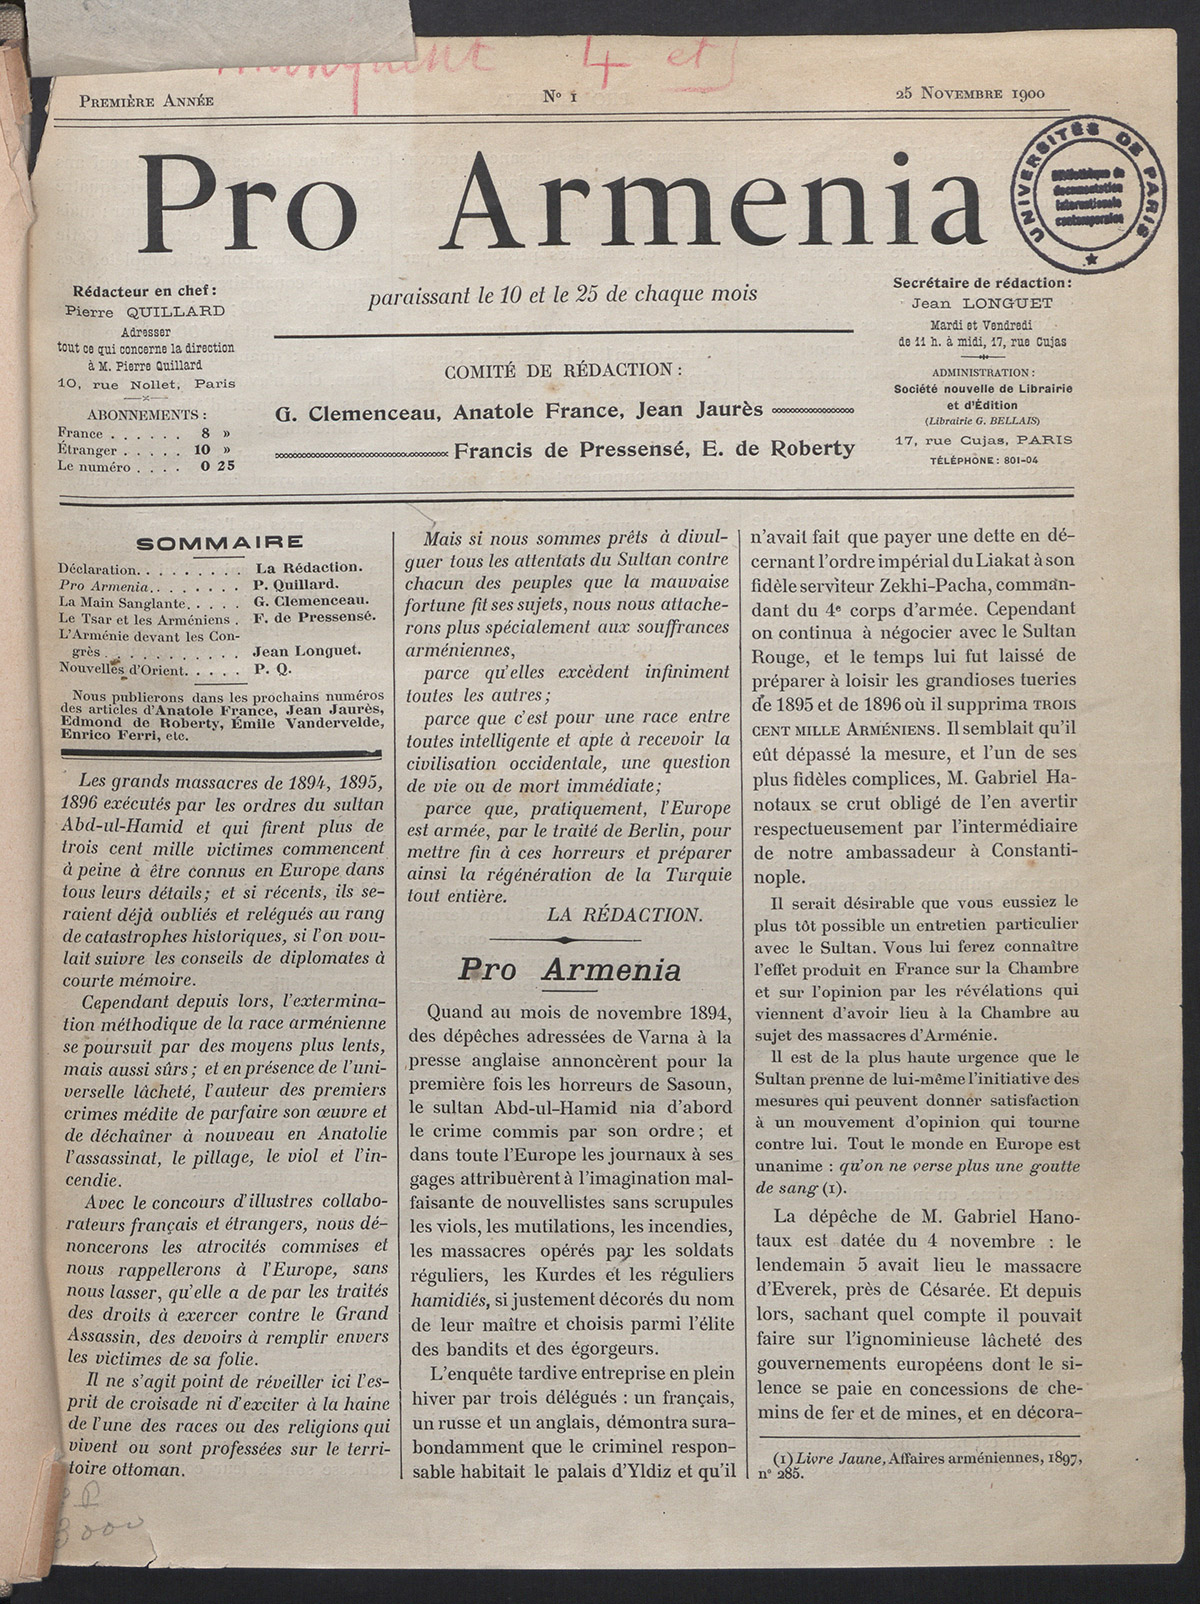 Pro Armenia, n°1, 25 novembre 1900